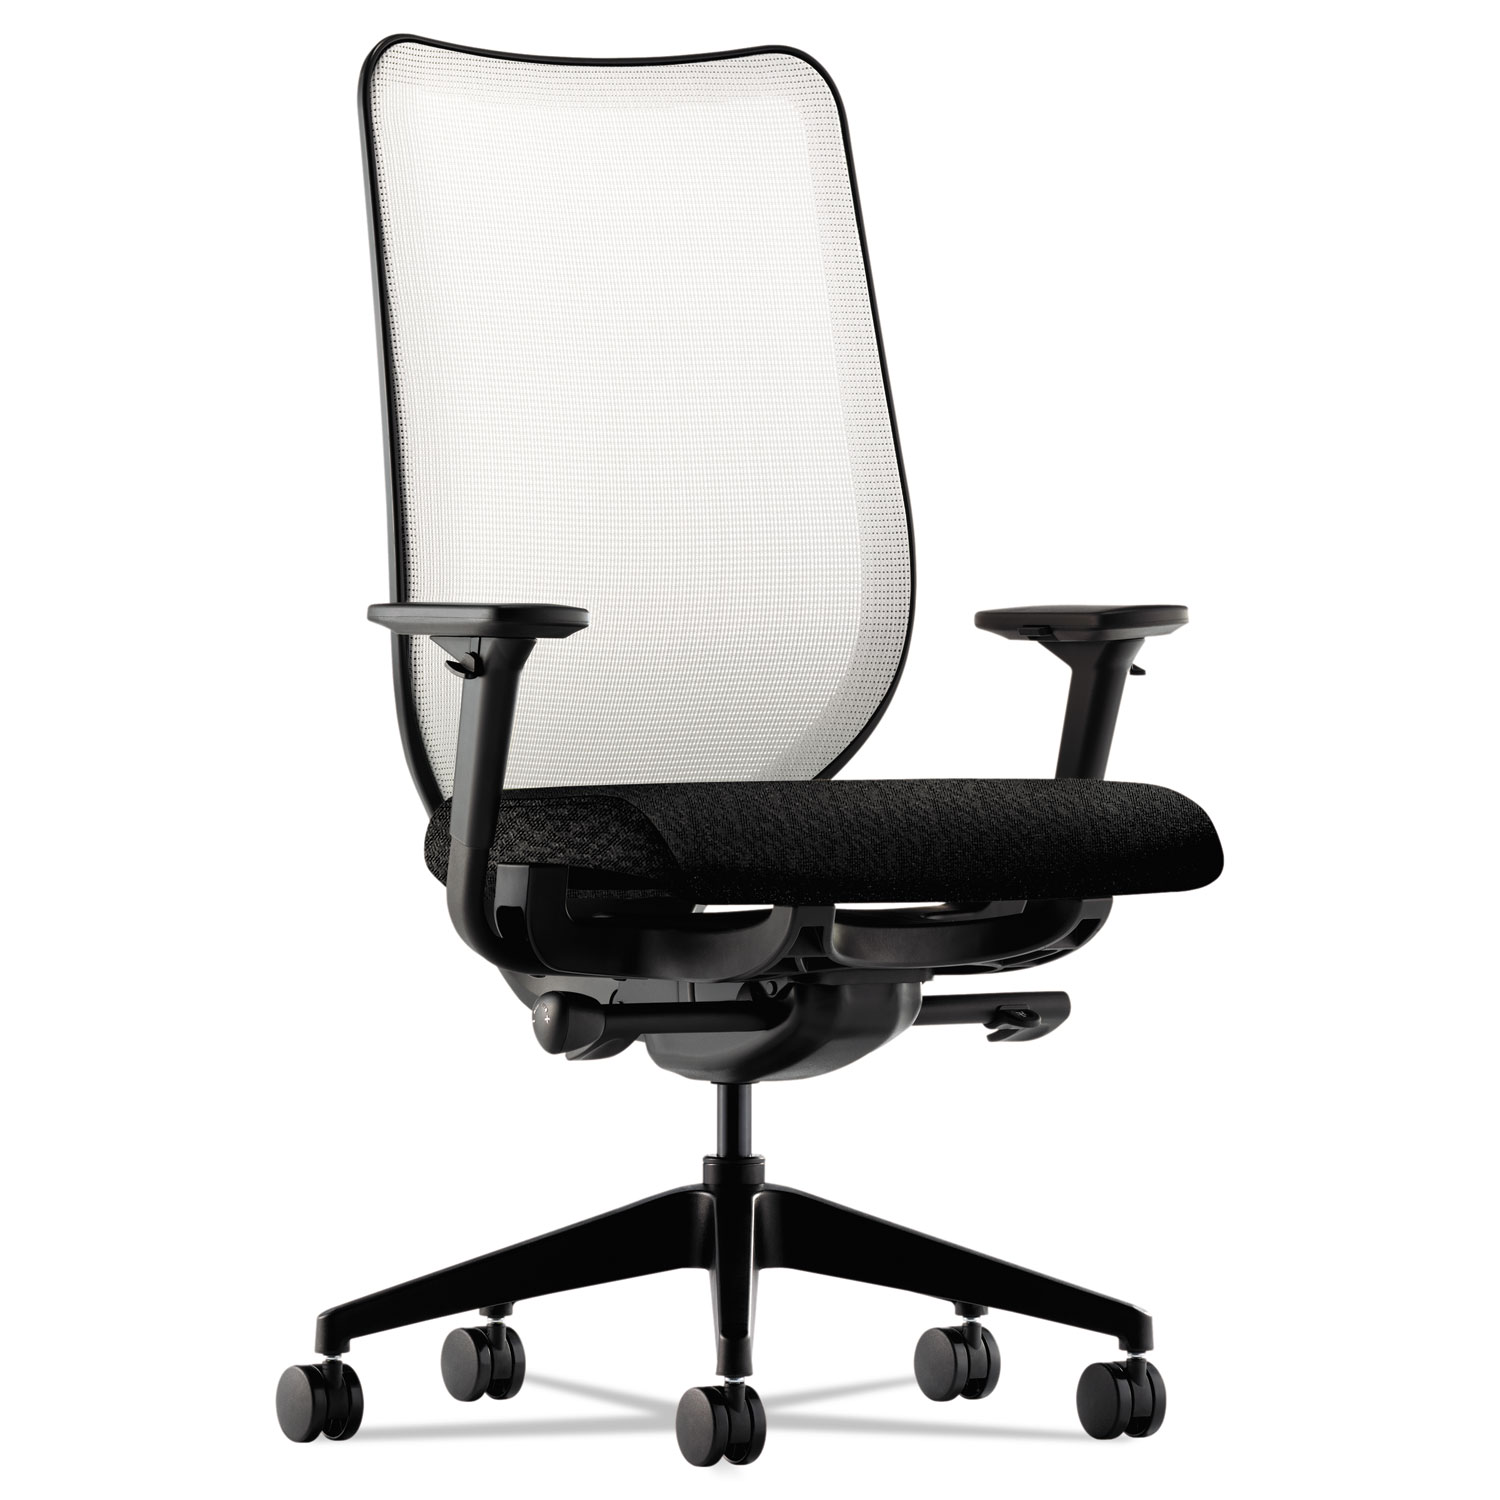 Nucleus Series Work Chair, Fog ilira-stretch M4 Back, Black Seat